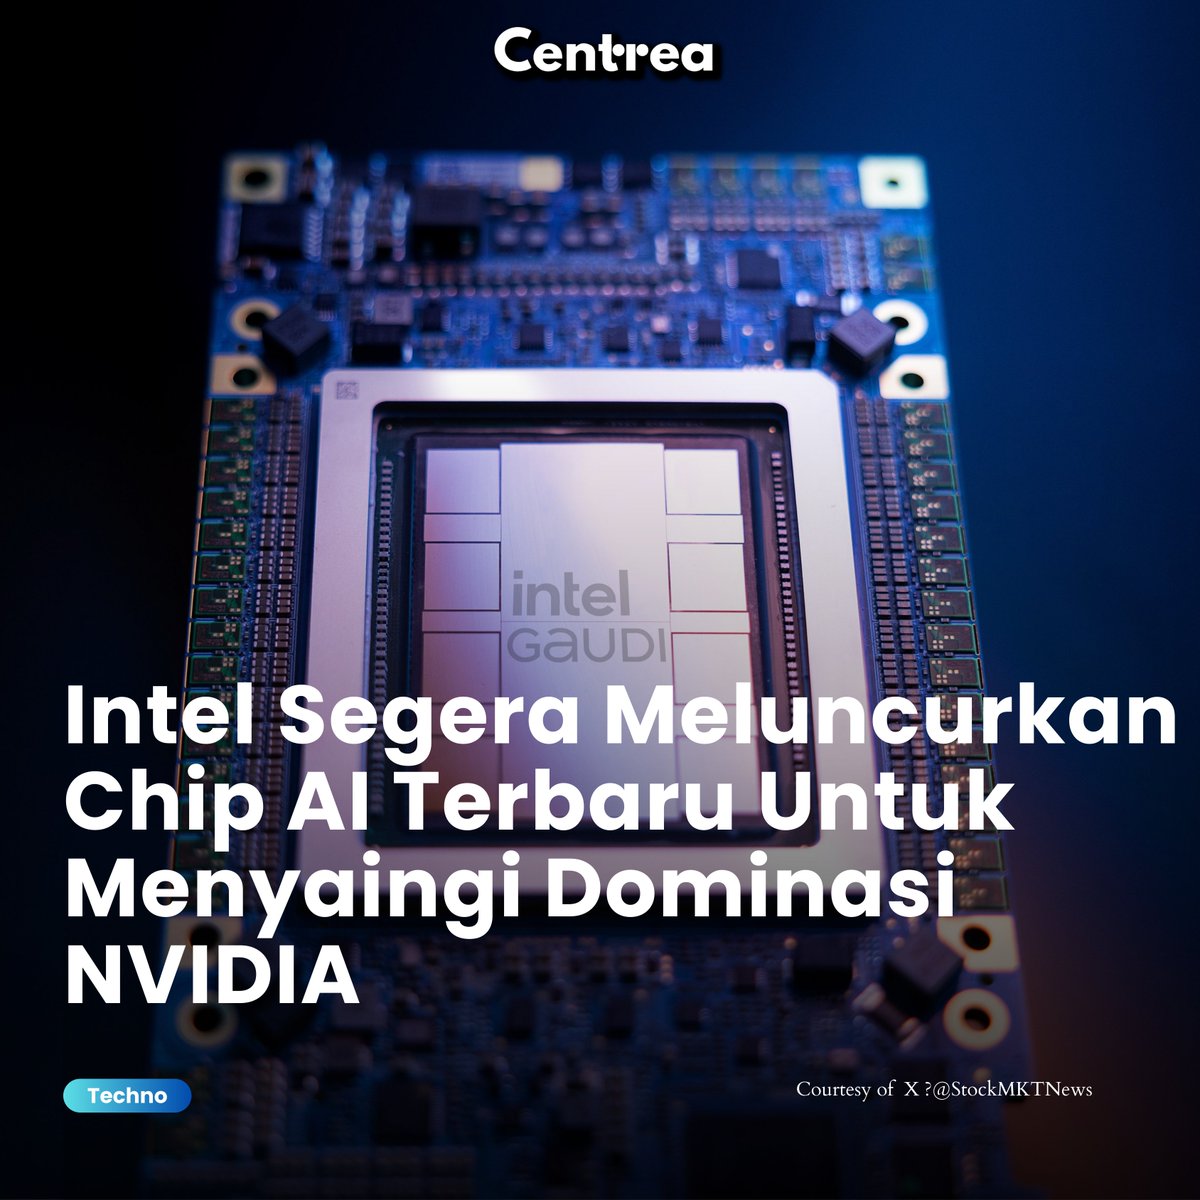 Intel mengumumkan peluncuran chip kecerdasan buatan terbaru pada acara Vision mereka, menantang dominasi Nvidia dalam semikonduktor untuk keperluan AI.

#centreaindonesiadingkan #intel #intelgaudi #intelgaudi3